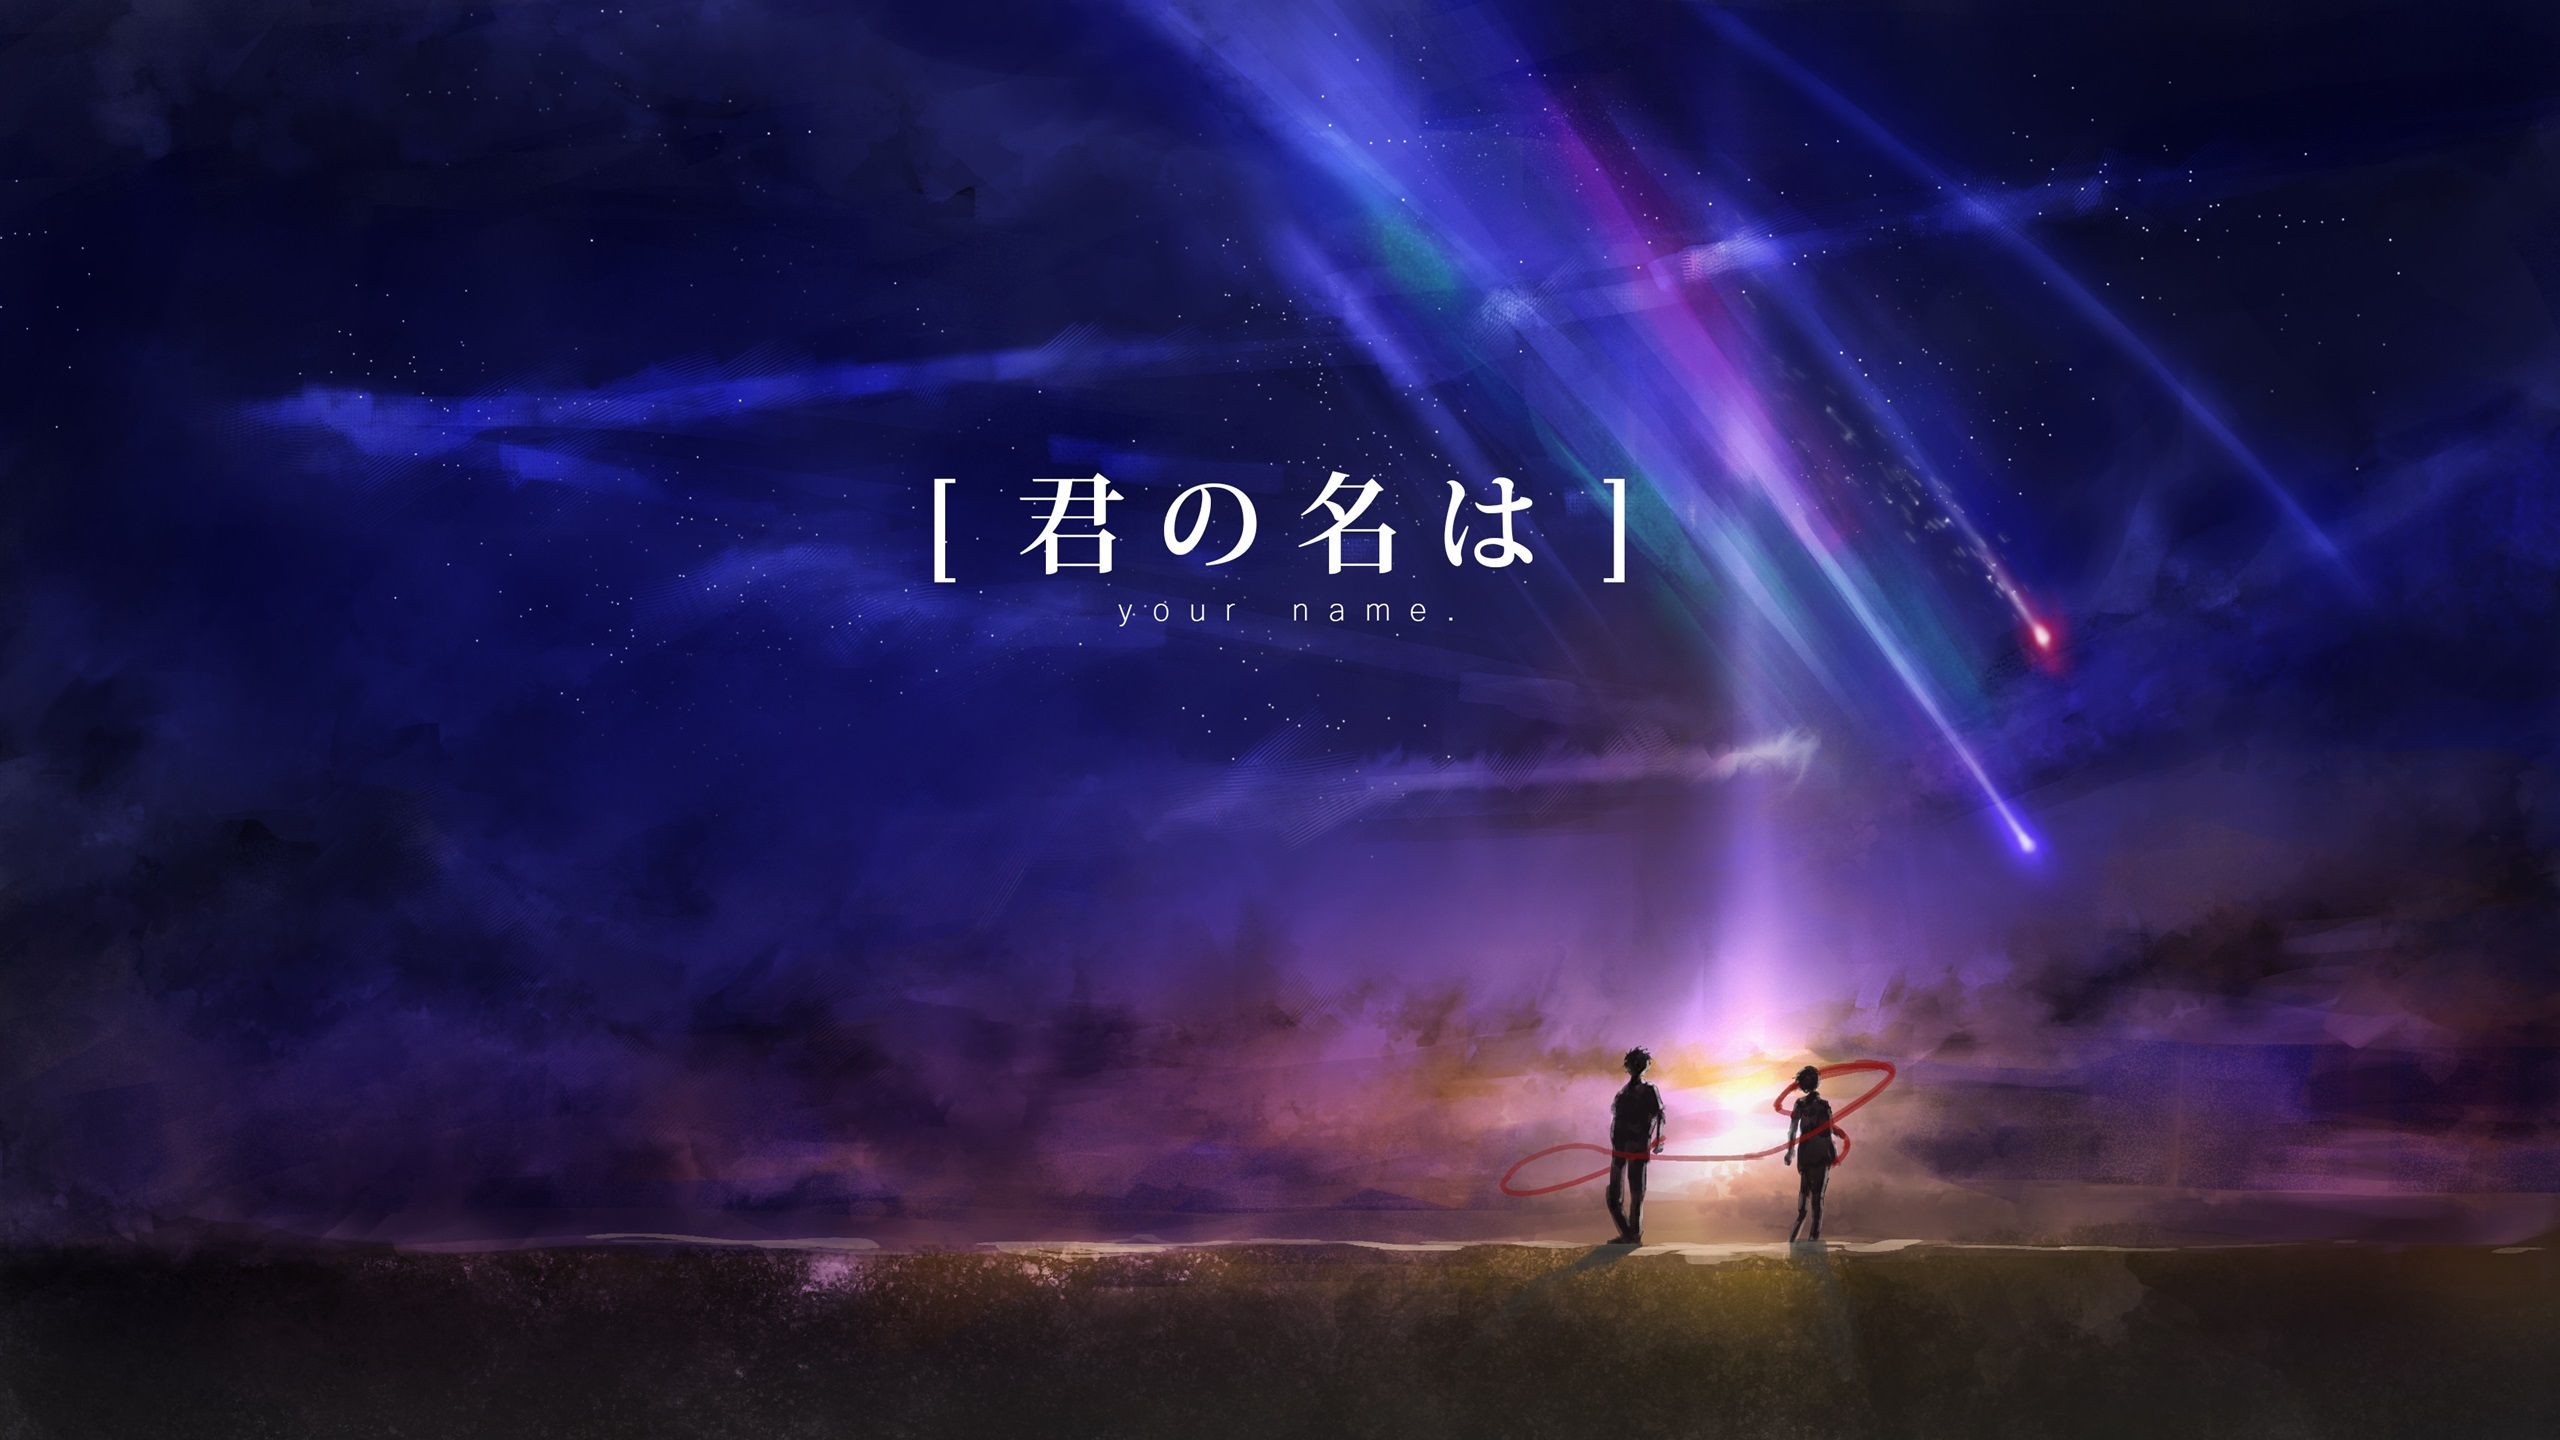 Wallpaper Your Name, anime movie, beautiful night, meteor